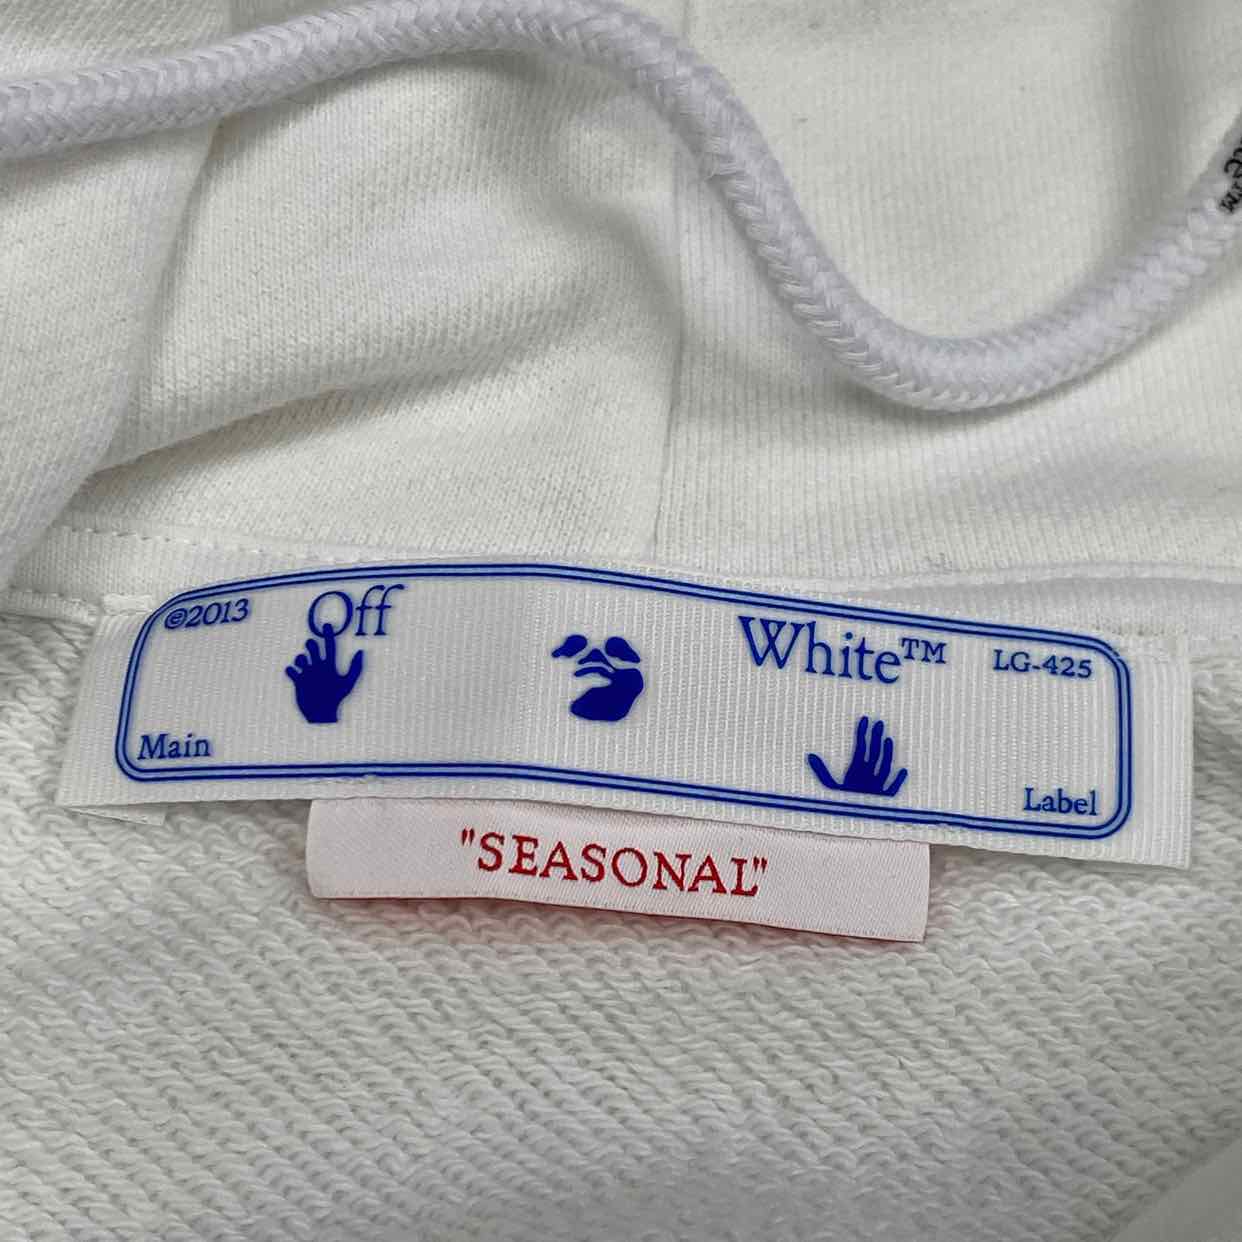 OFF-WHITE Hoodie "ARROW SKATE" White New Size M